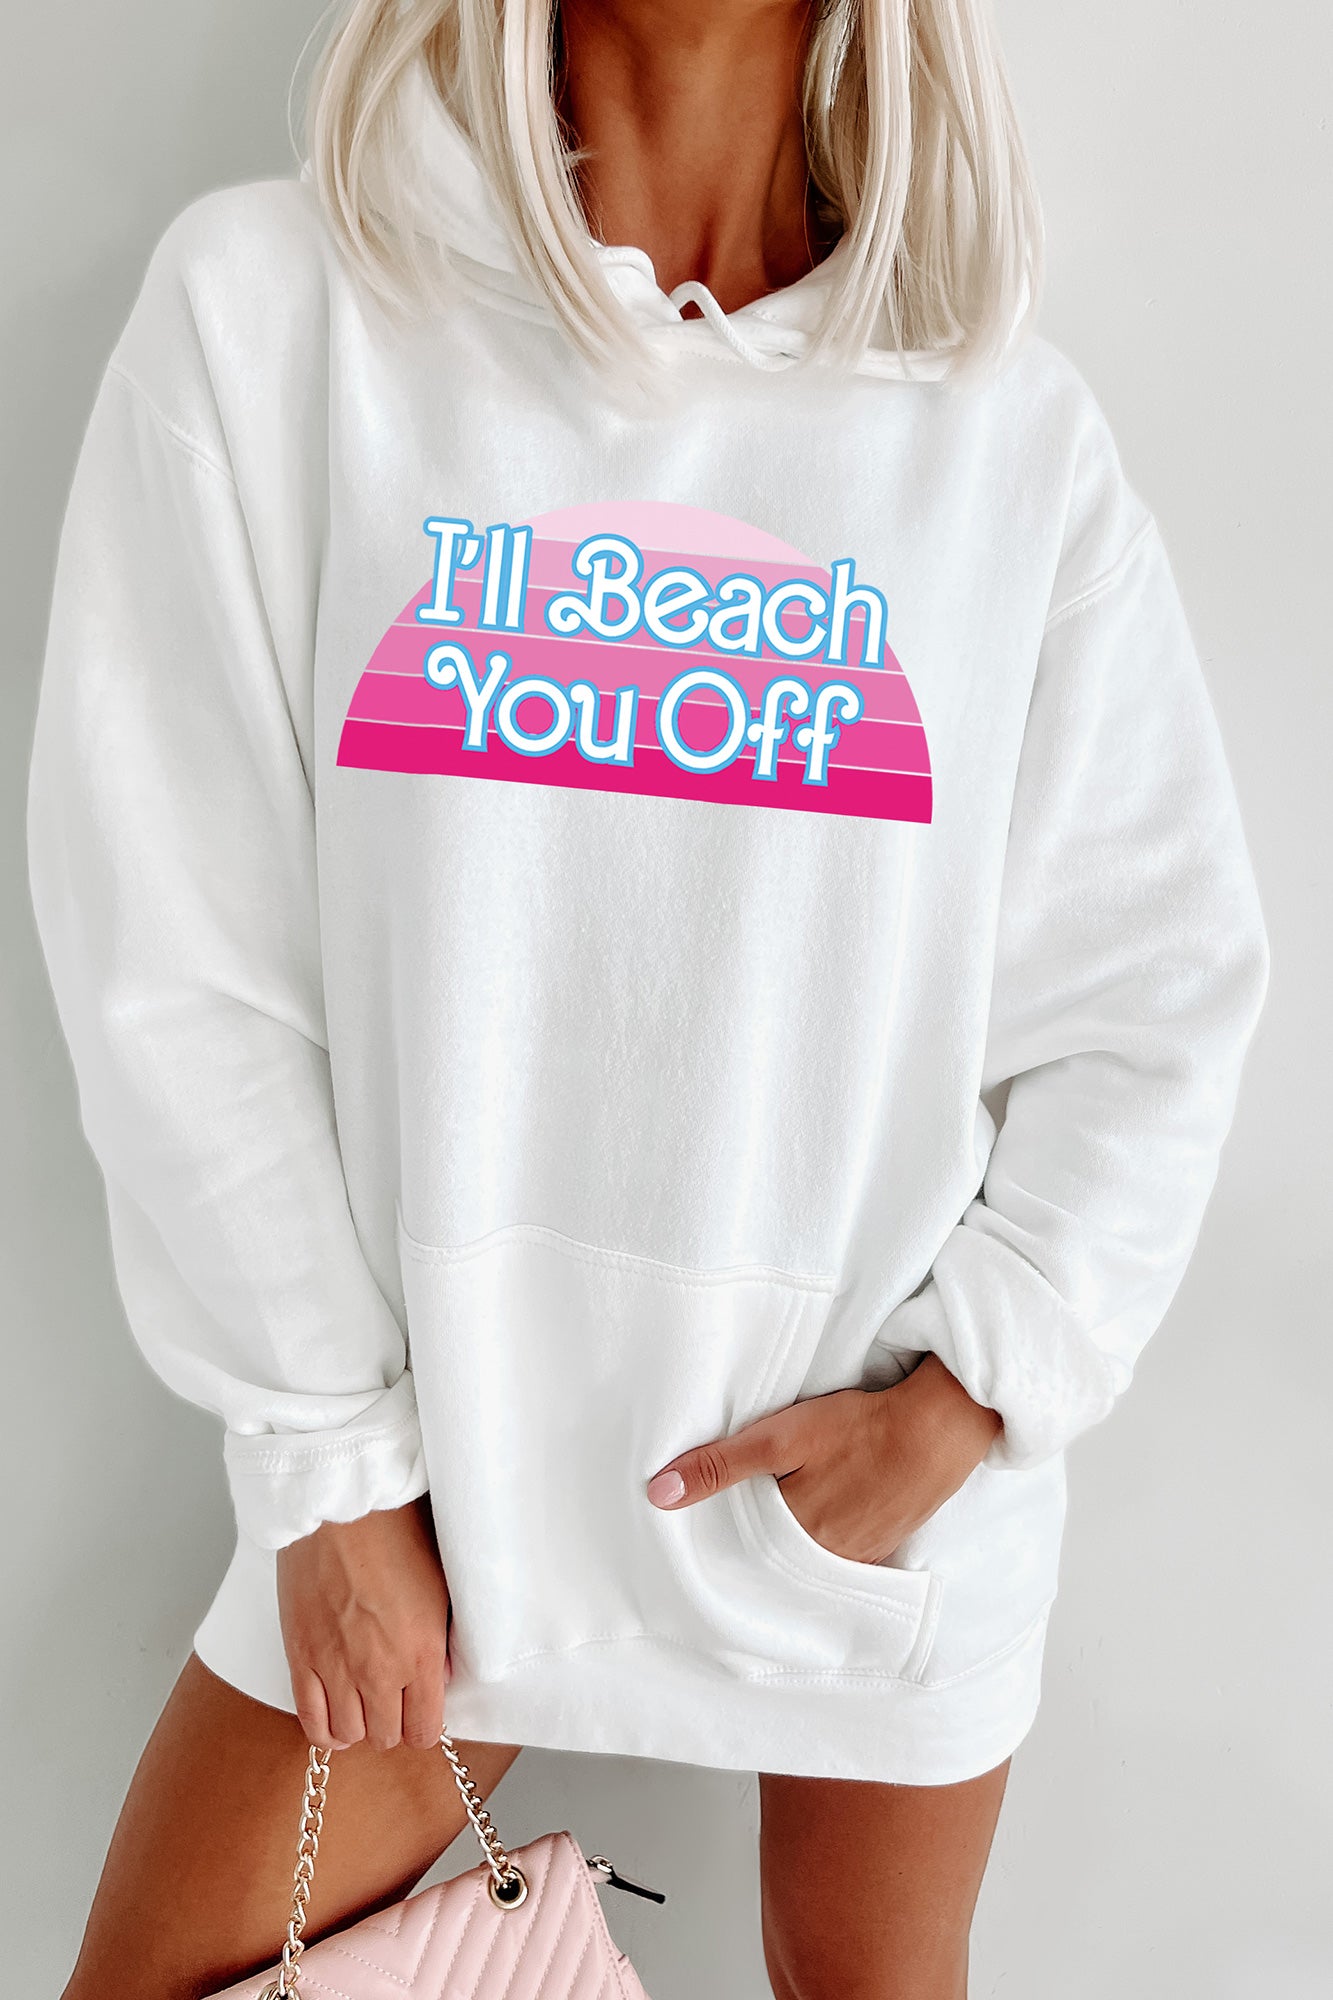 "I'll Beach You Off" Graphic - Multiple Shirt Options (White) - Print On Demand - NanaMacs